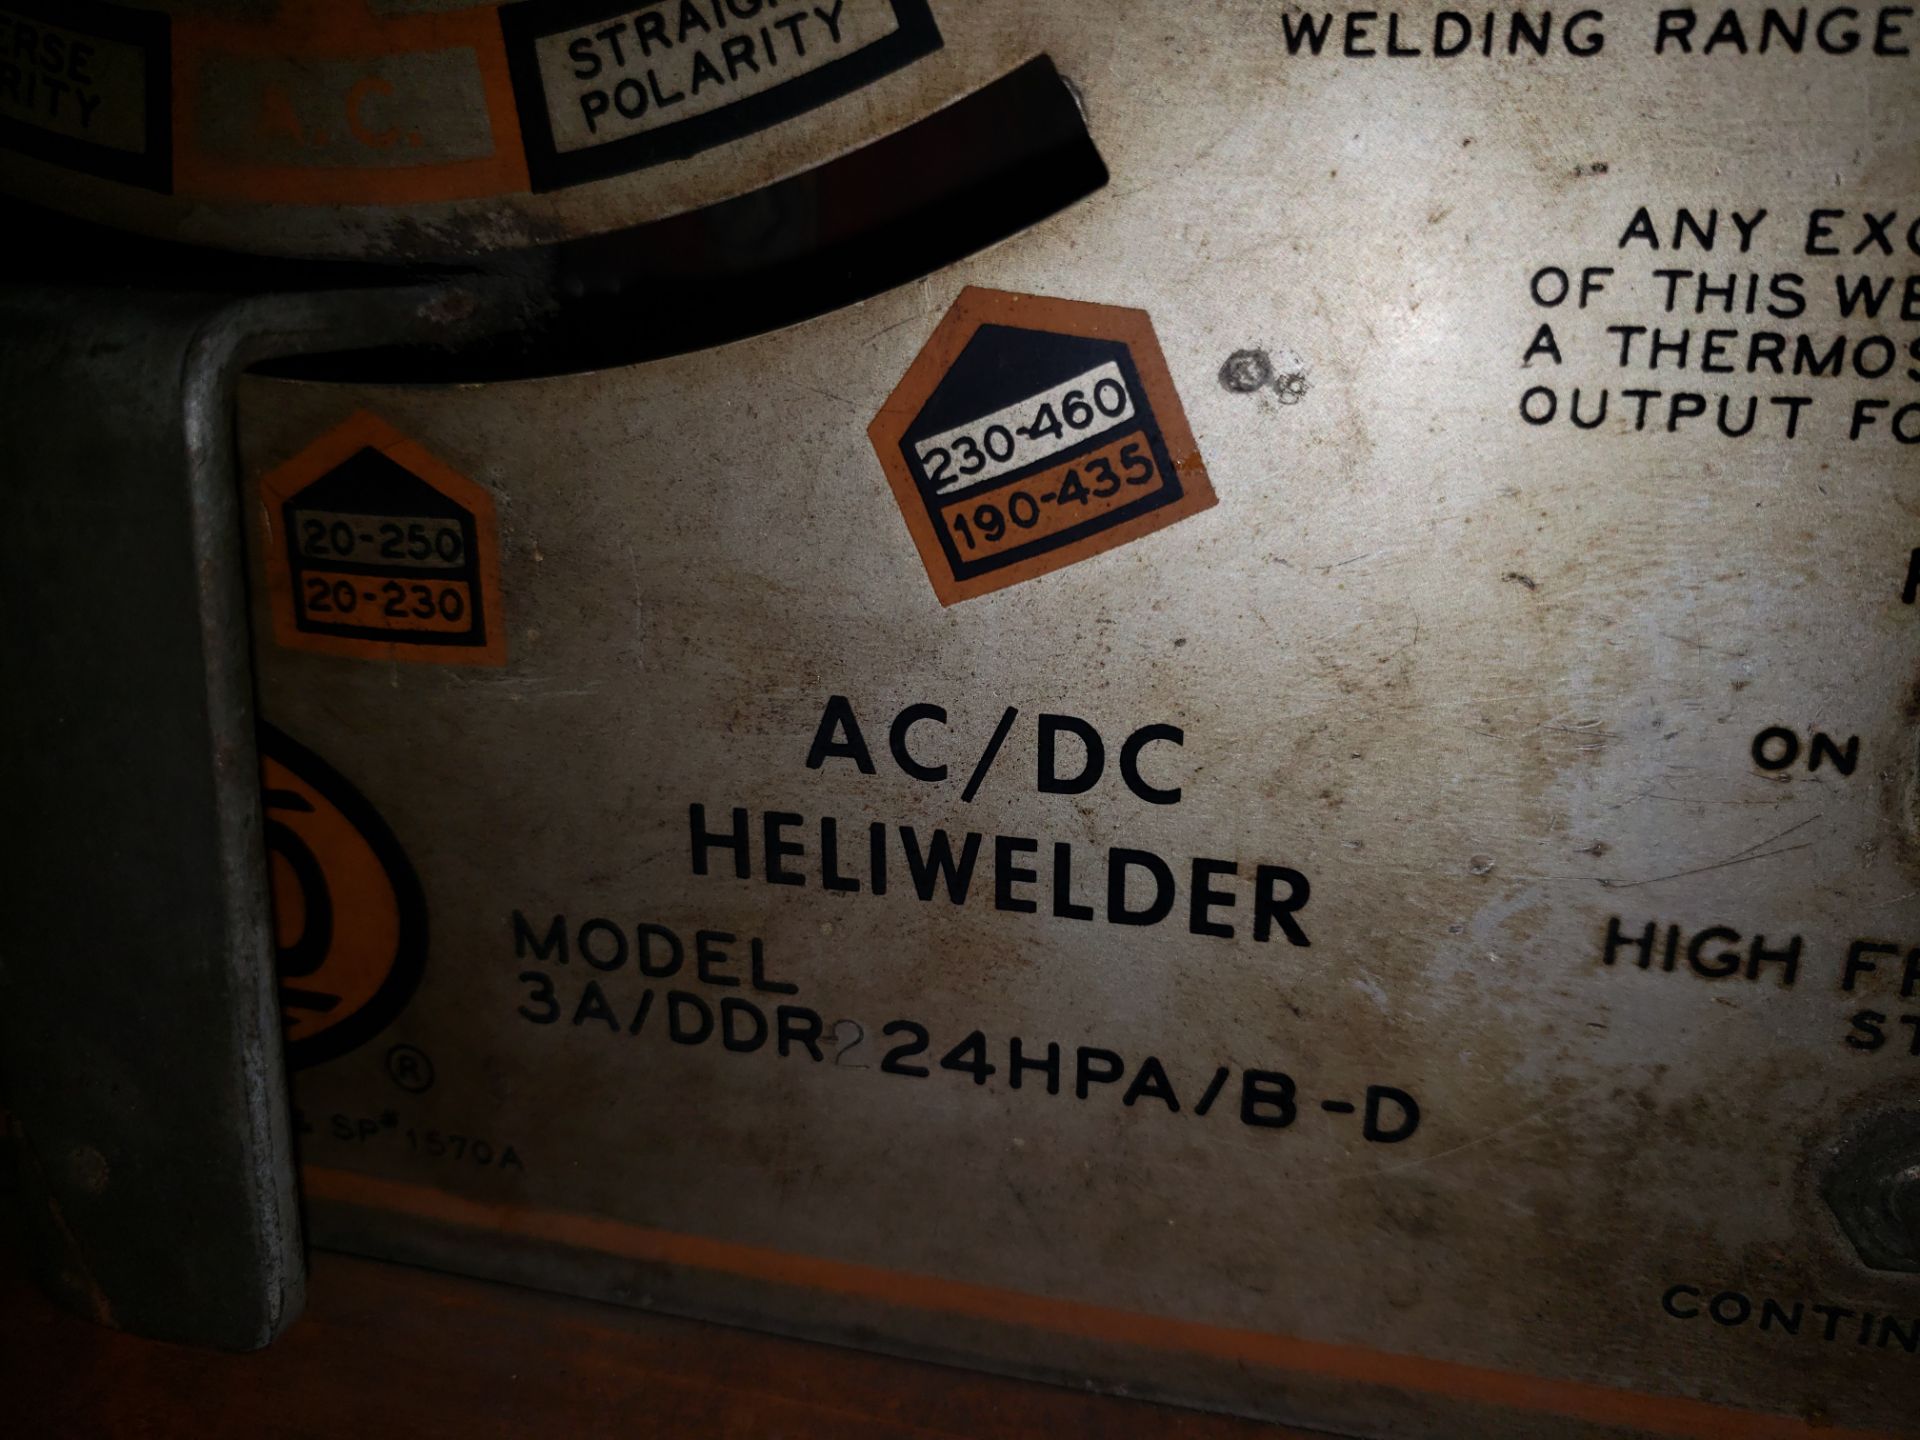 AIRCO AC/DC HELIWELDER MODEL-3A/DDR 24HDA/B-D - Image 3 of 3